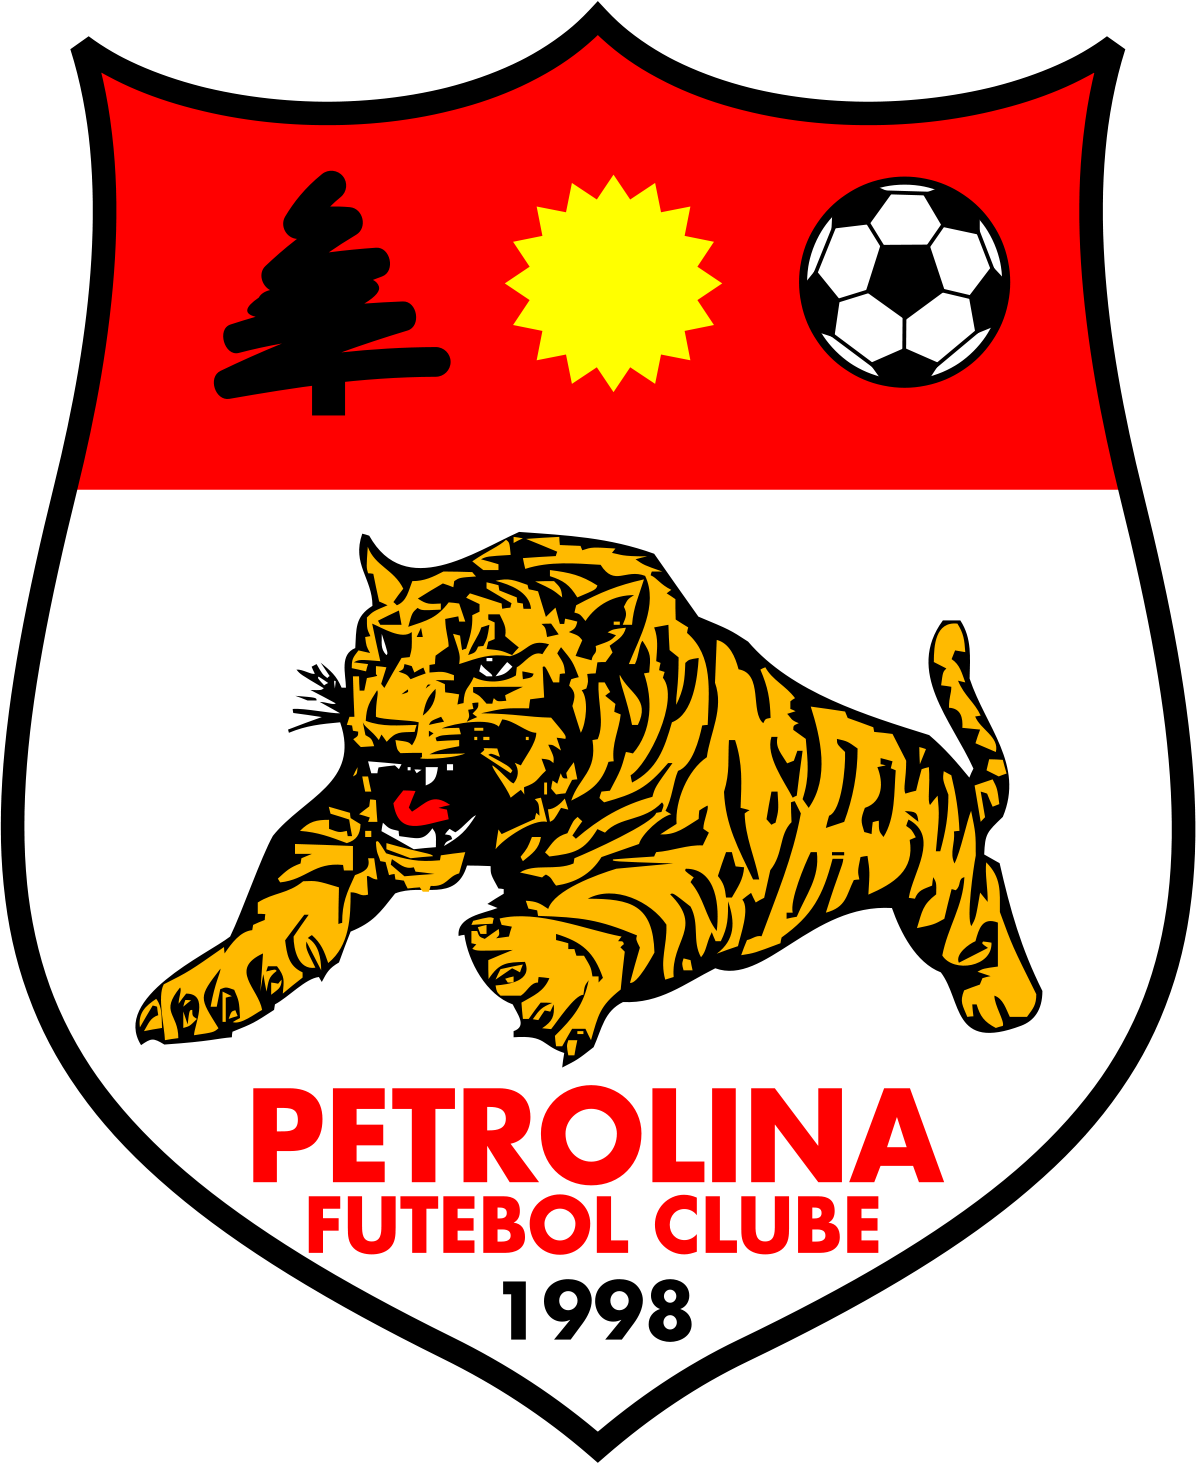 Petrolina logo